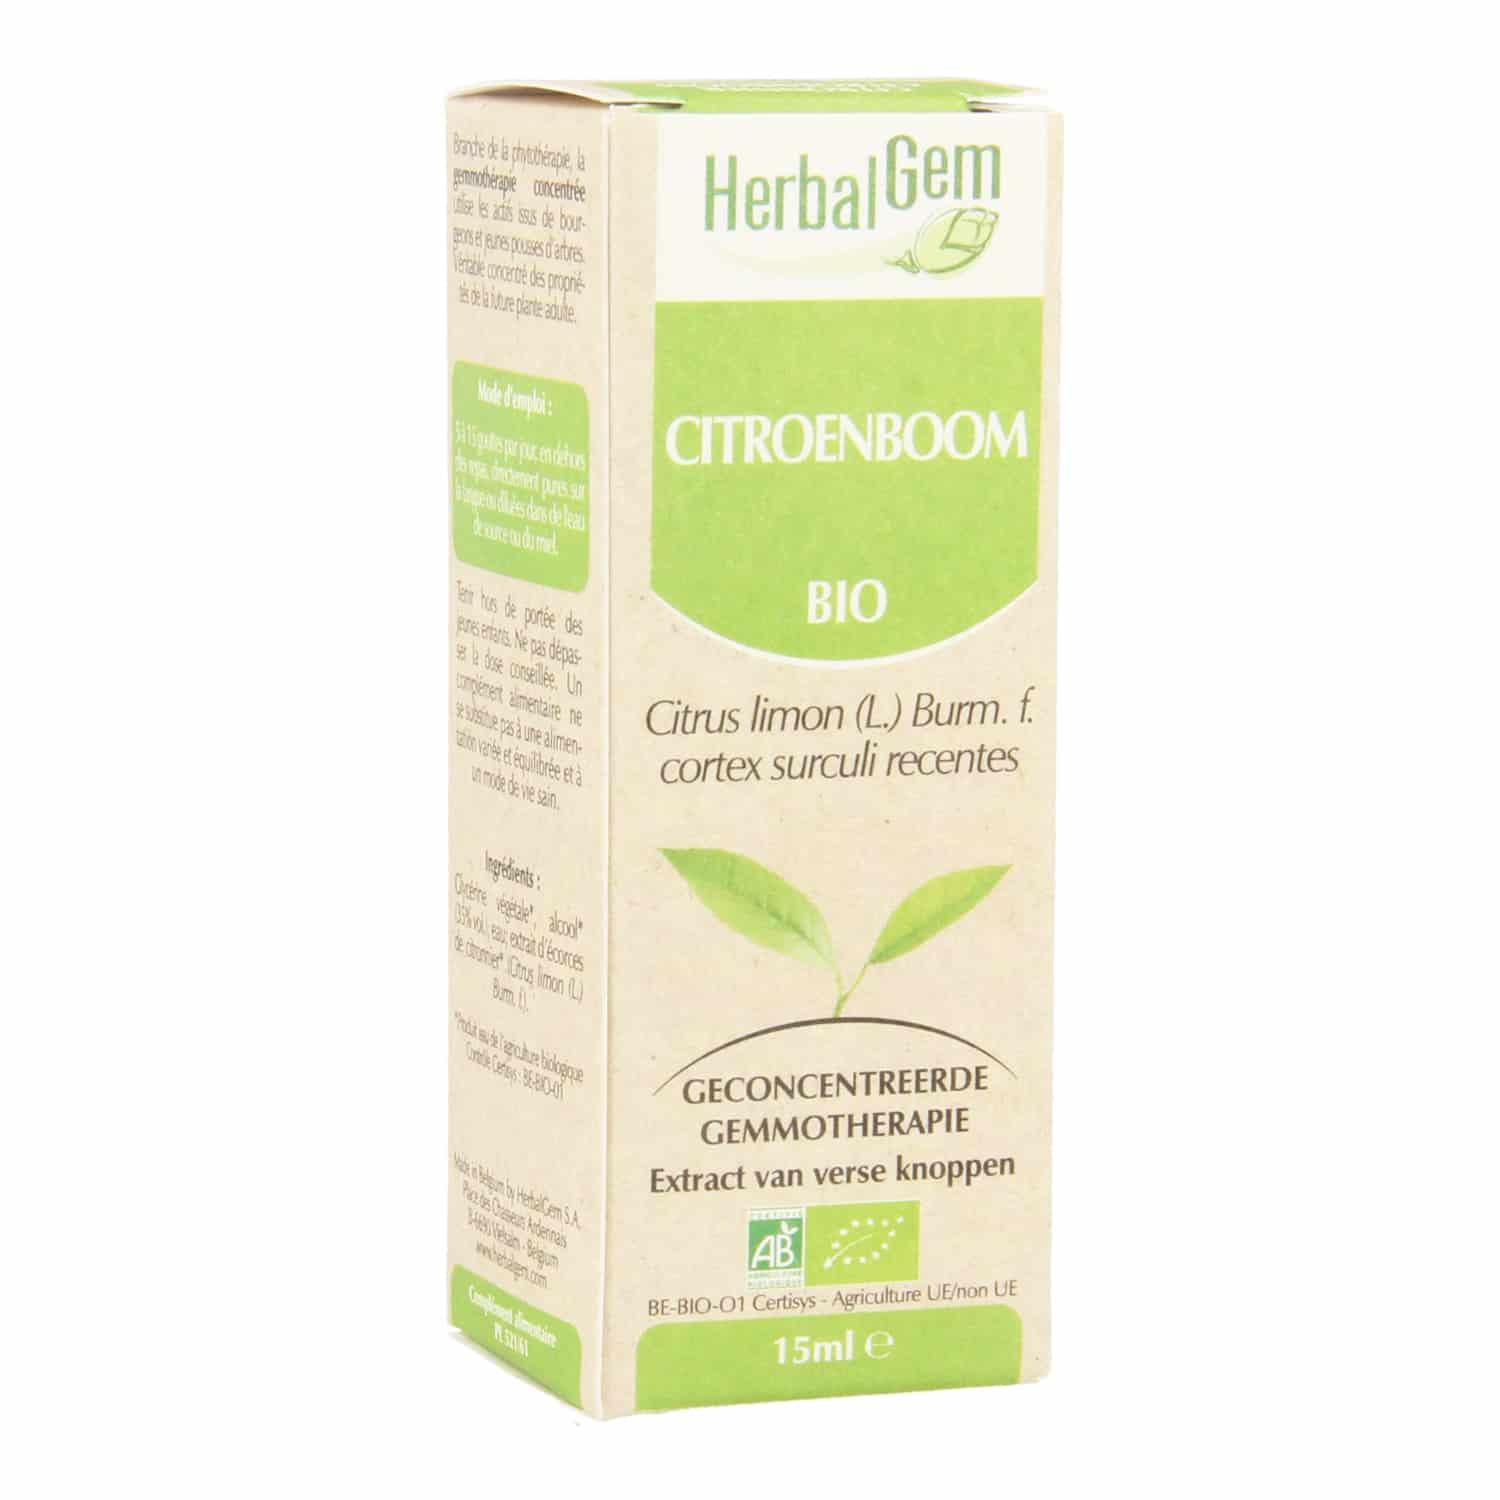 HerbalGem Citroenboom